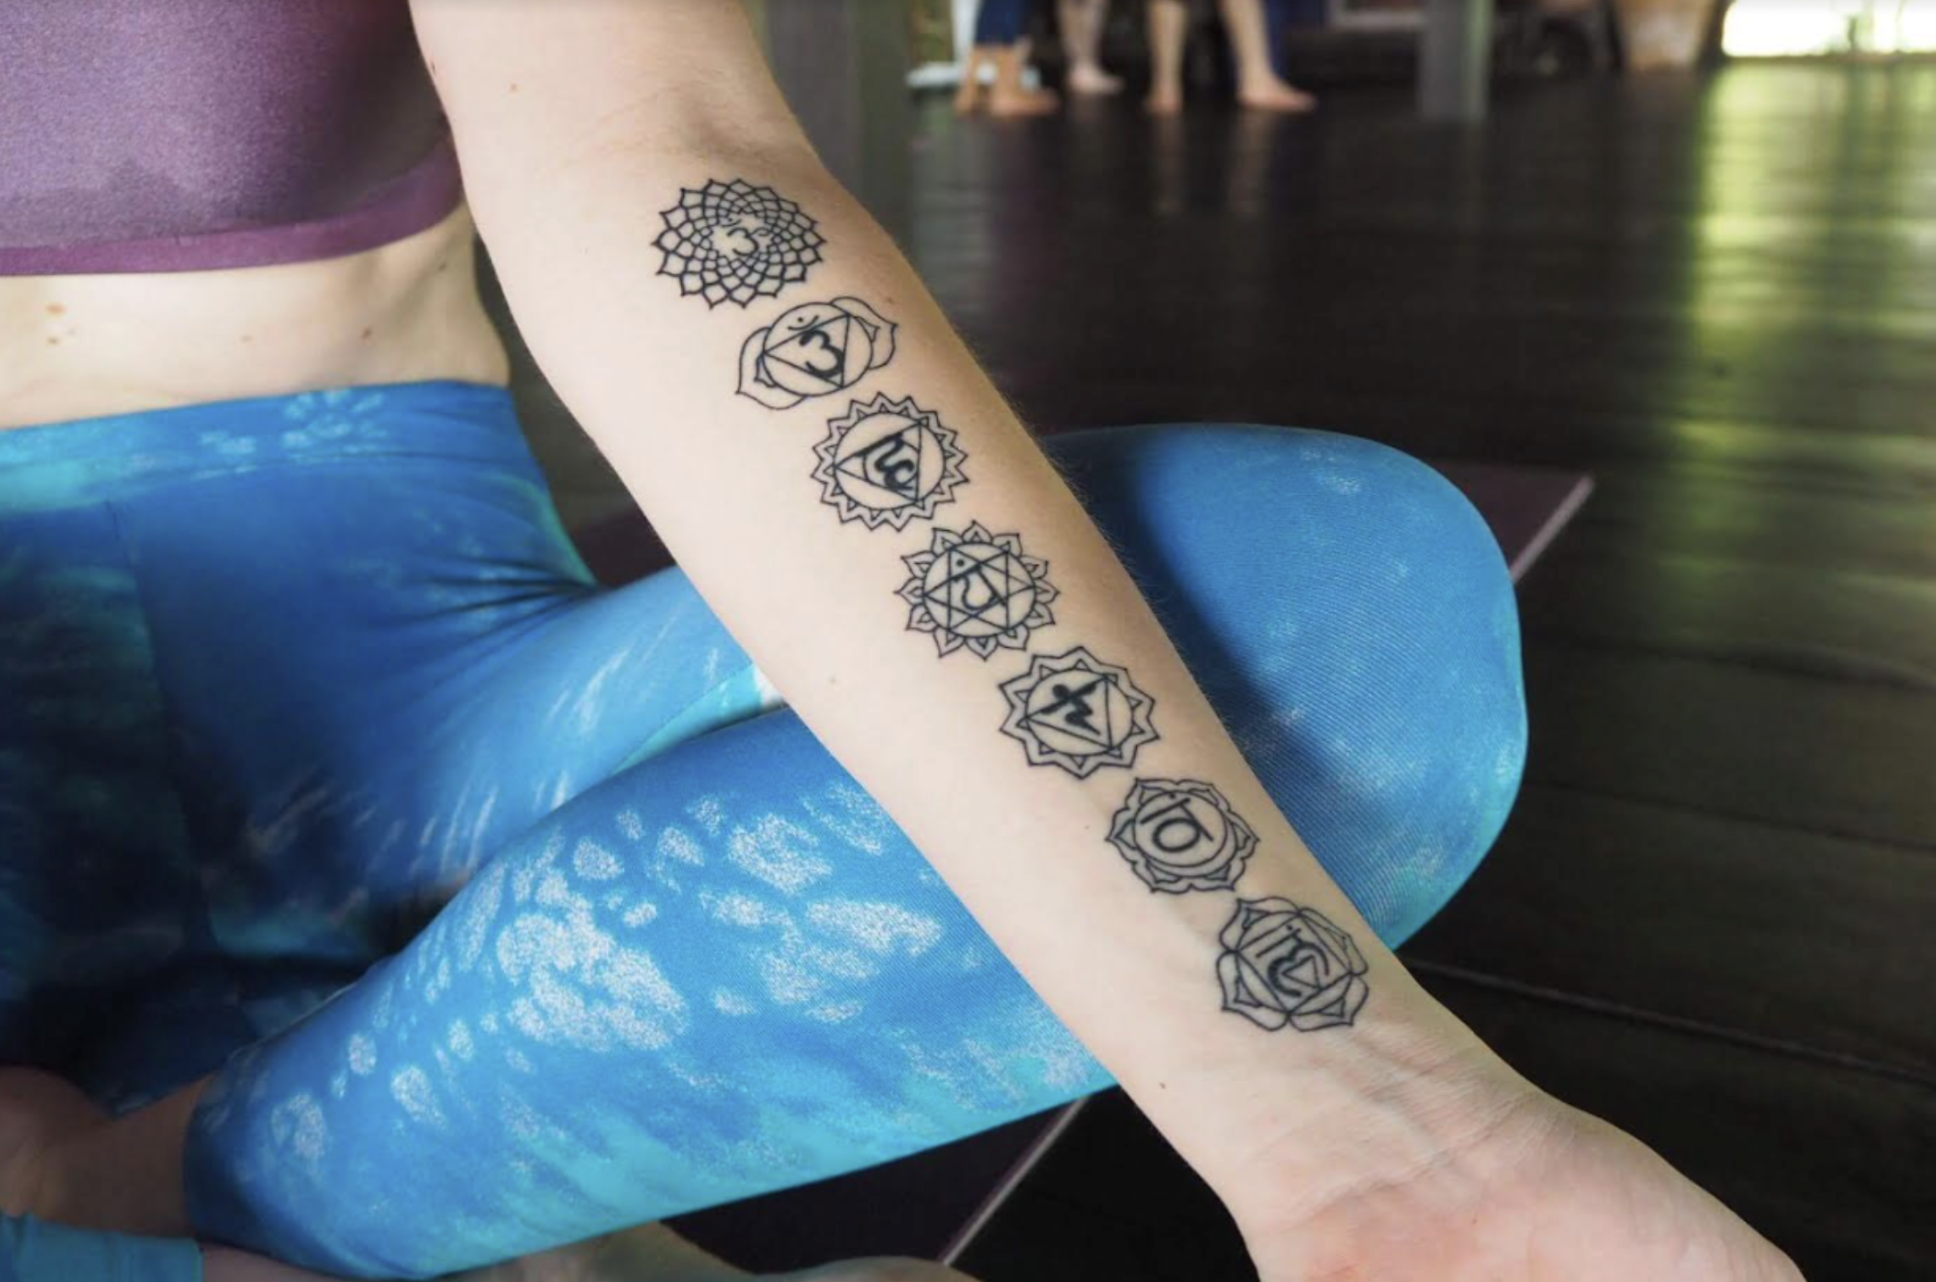 Ella Heart’s spirituality-inspired tattoo